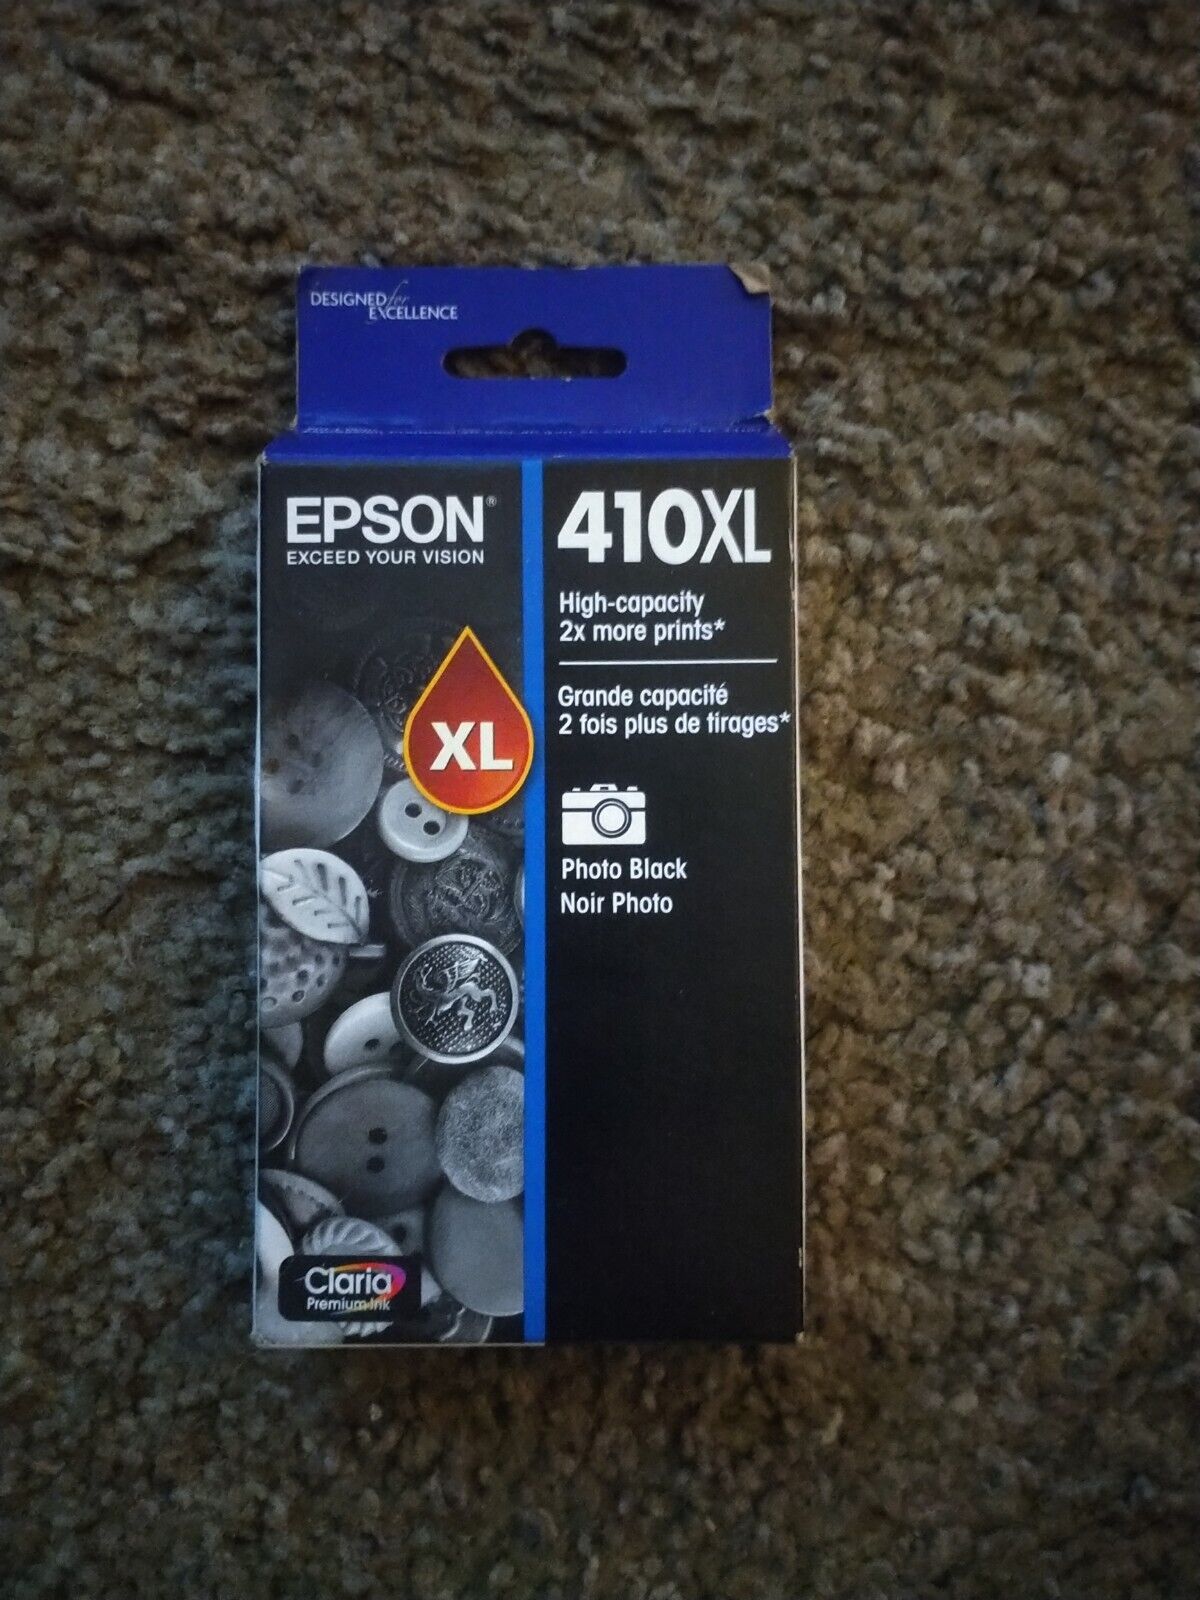 Epson 410XL Claria Premium High-Capacity Black Ink Cartridge - Exp. 5/24 - New